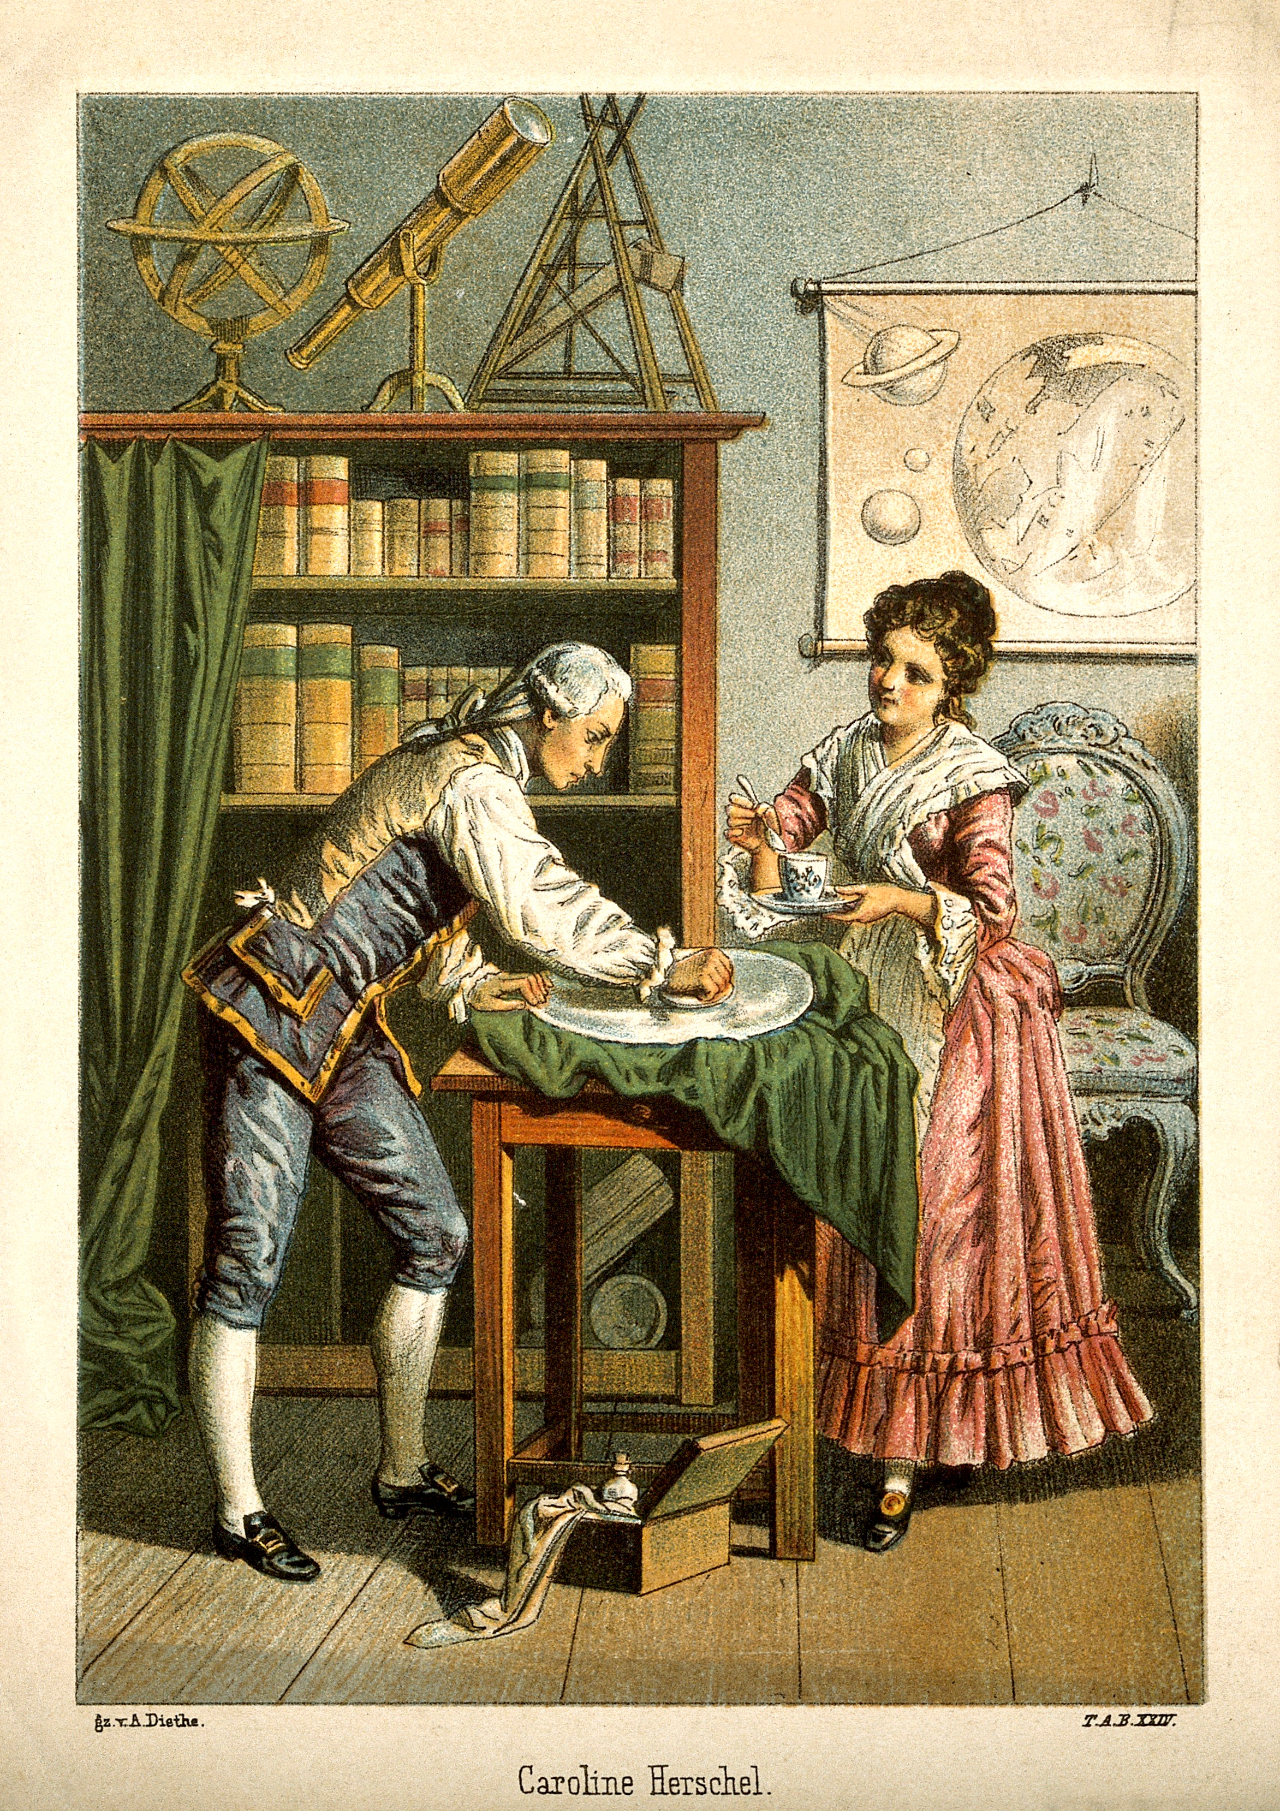 Illustration of William and Caroline Herschel